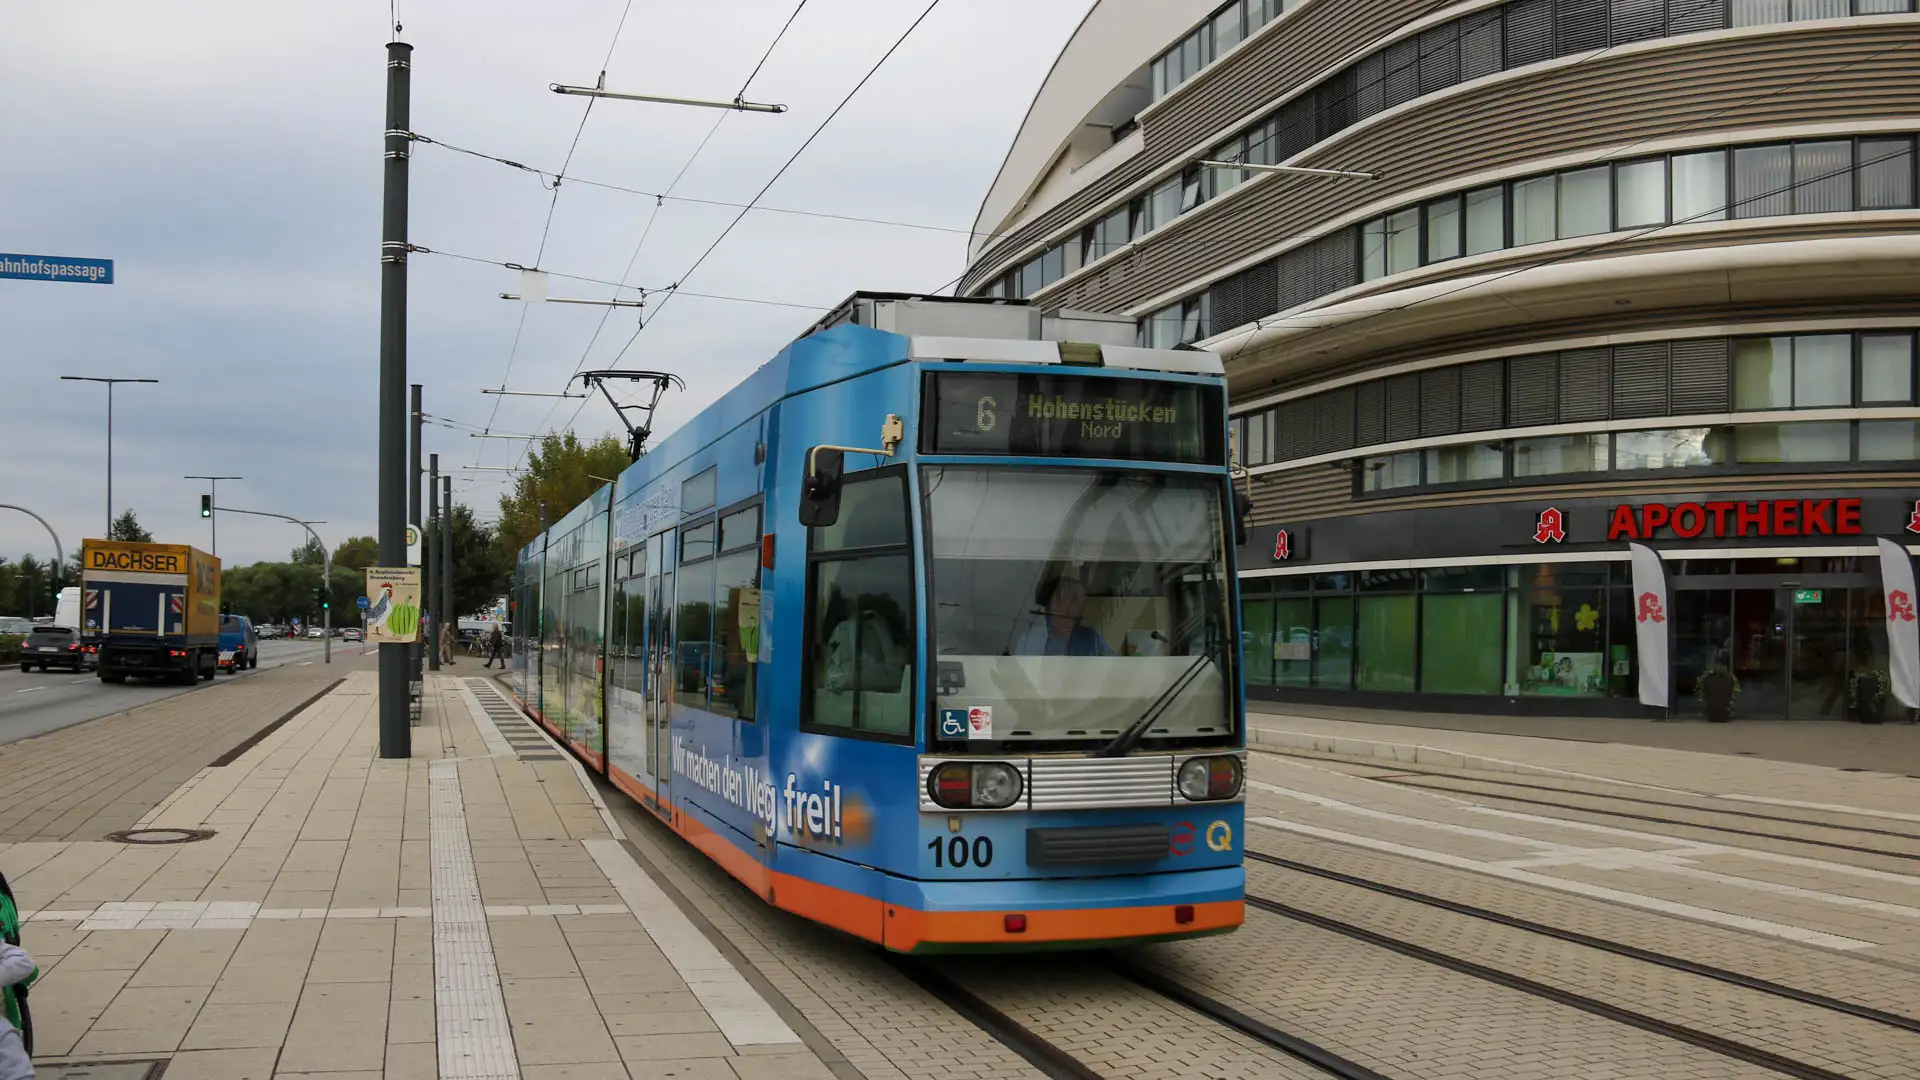 https://public-transport.net/tram/Brandenburg/slides/8957_07-1920w.webp